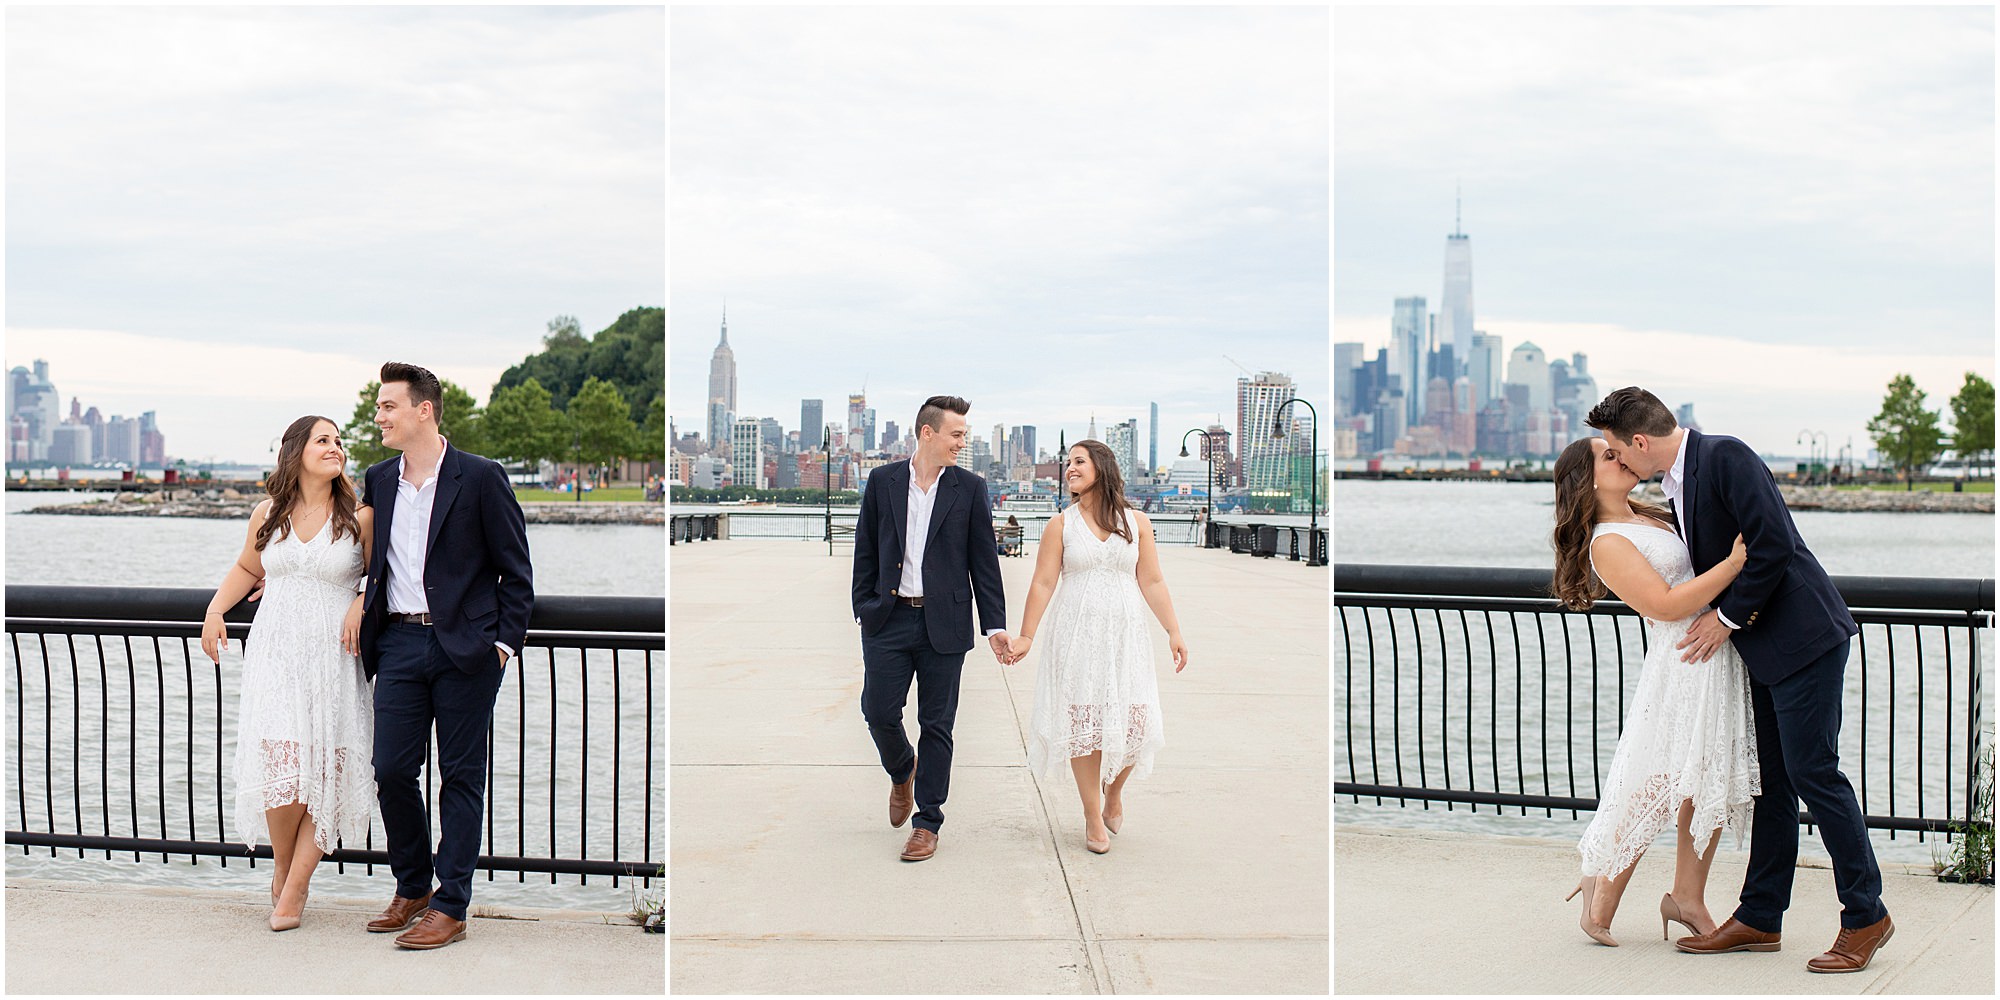 New Jersey Engagement Photo Locations: Hoboken, NJ